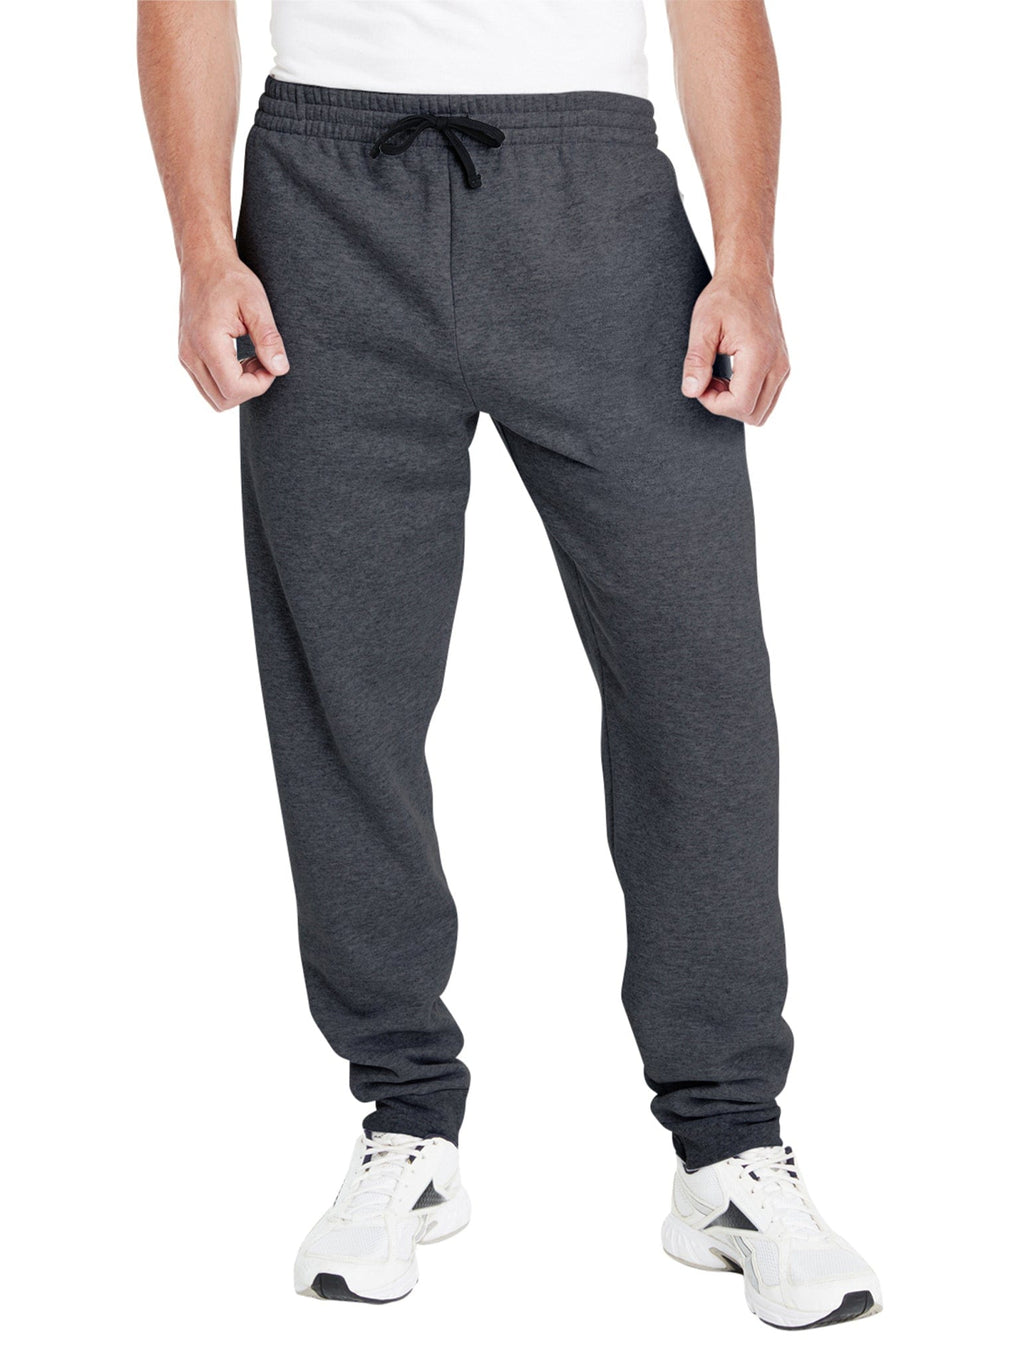 Jerzees Men's Fleece Sweatpants, Light Grey Heather, Large 